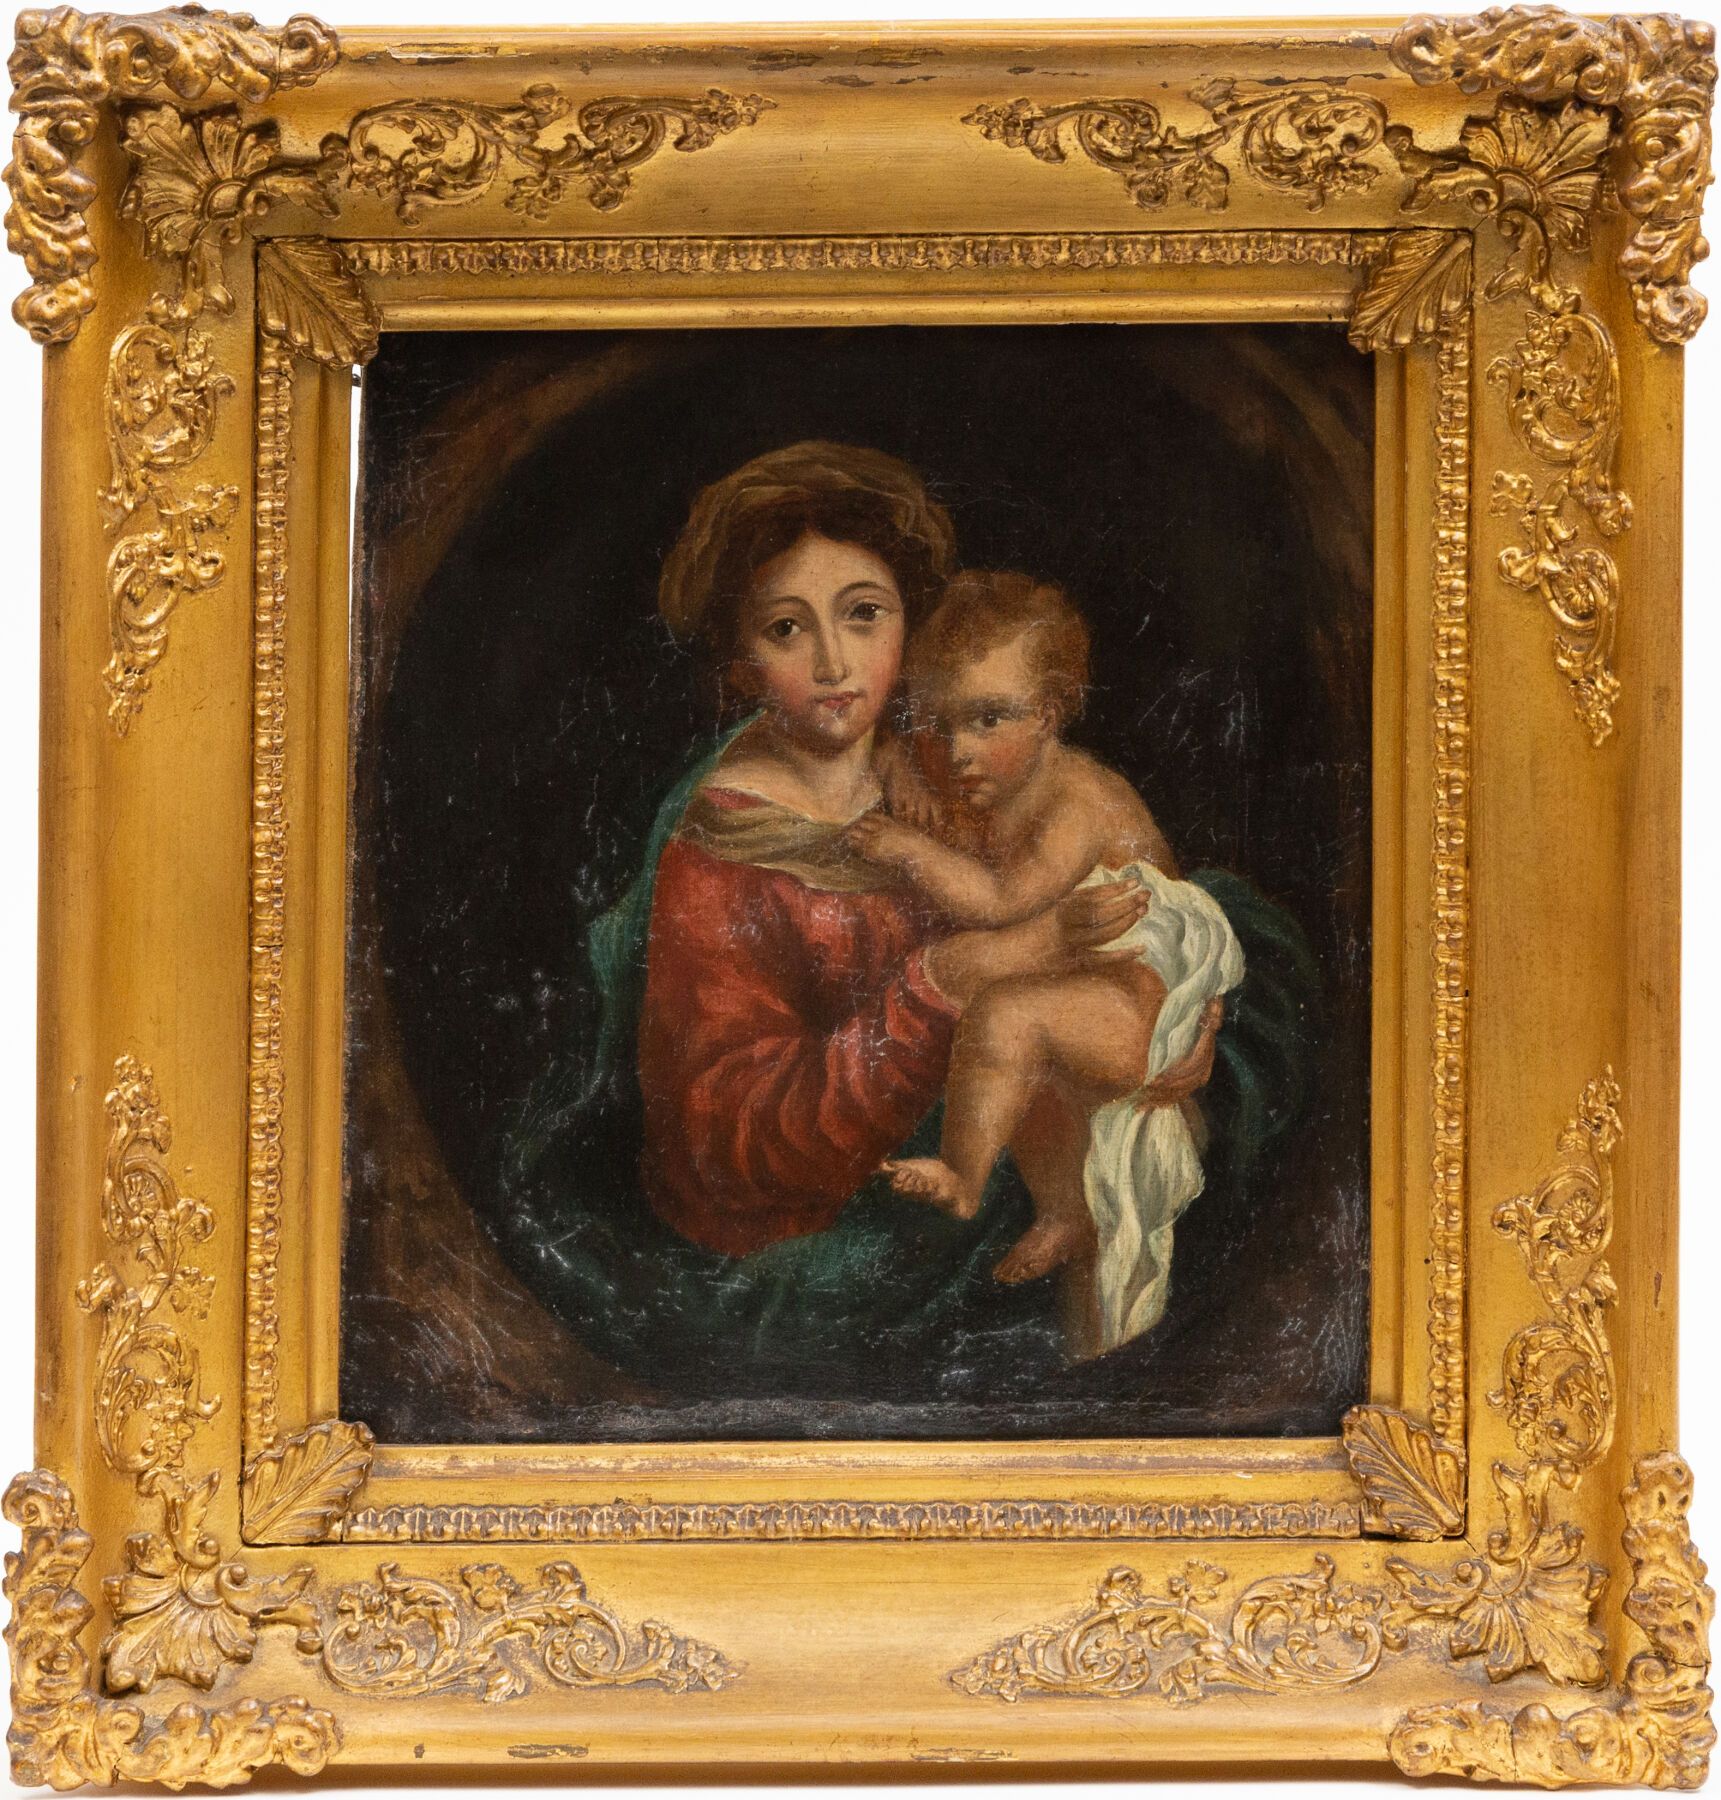 Null 18世纪的意大利学校。
圣母和孩子。
布面油画。 
高_25,5厘米，宽_23厘米，装框
装在一个雕刻和镀金的木框里。